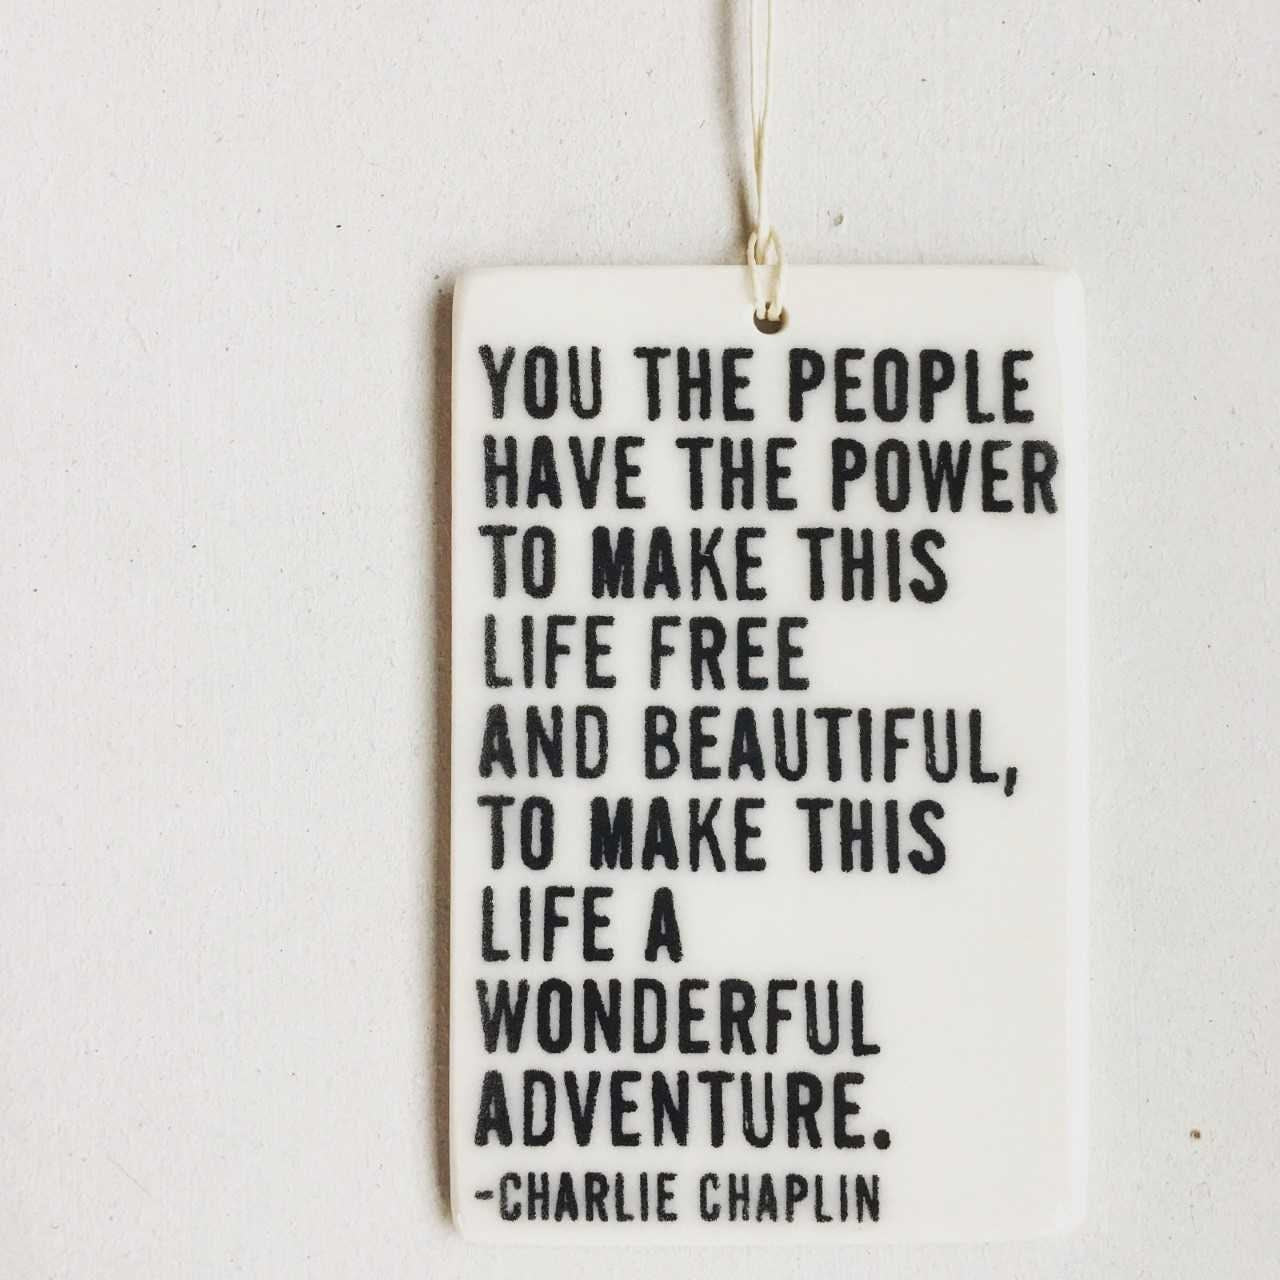 charlie chaplin quote ceramic wall tag